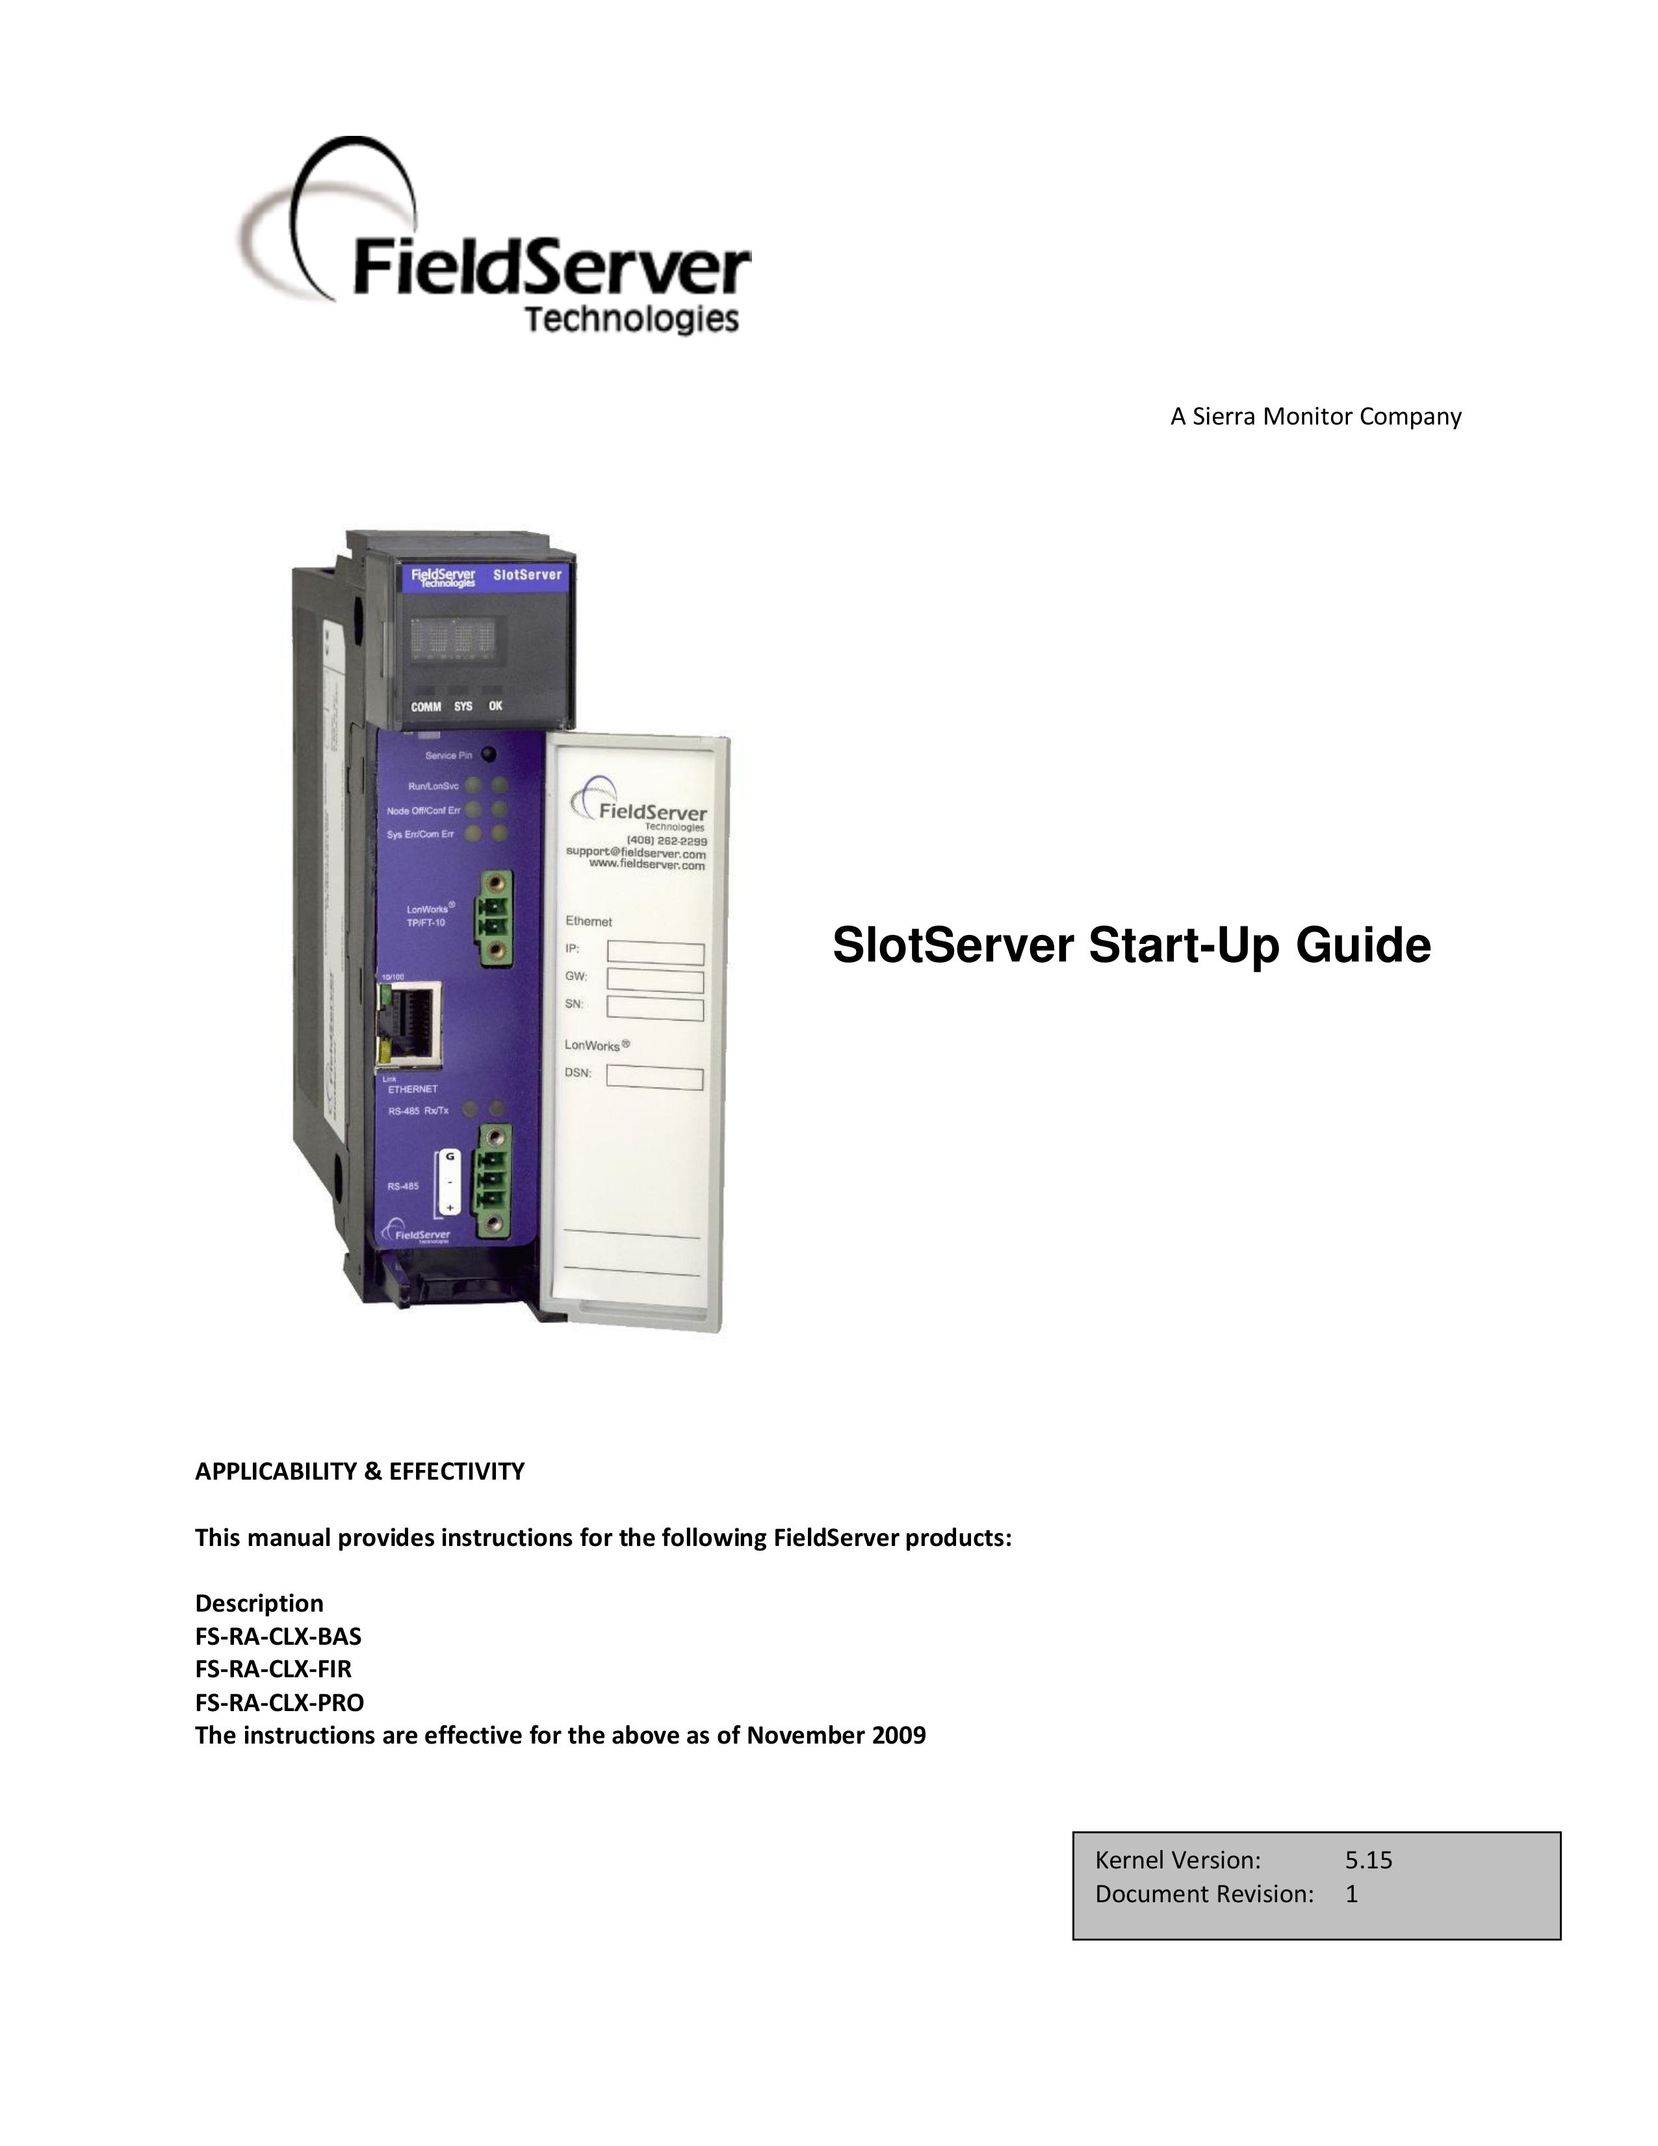 FieldServer FS-RA-CLX-PRO Server User Manual